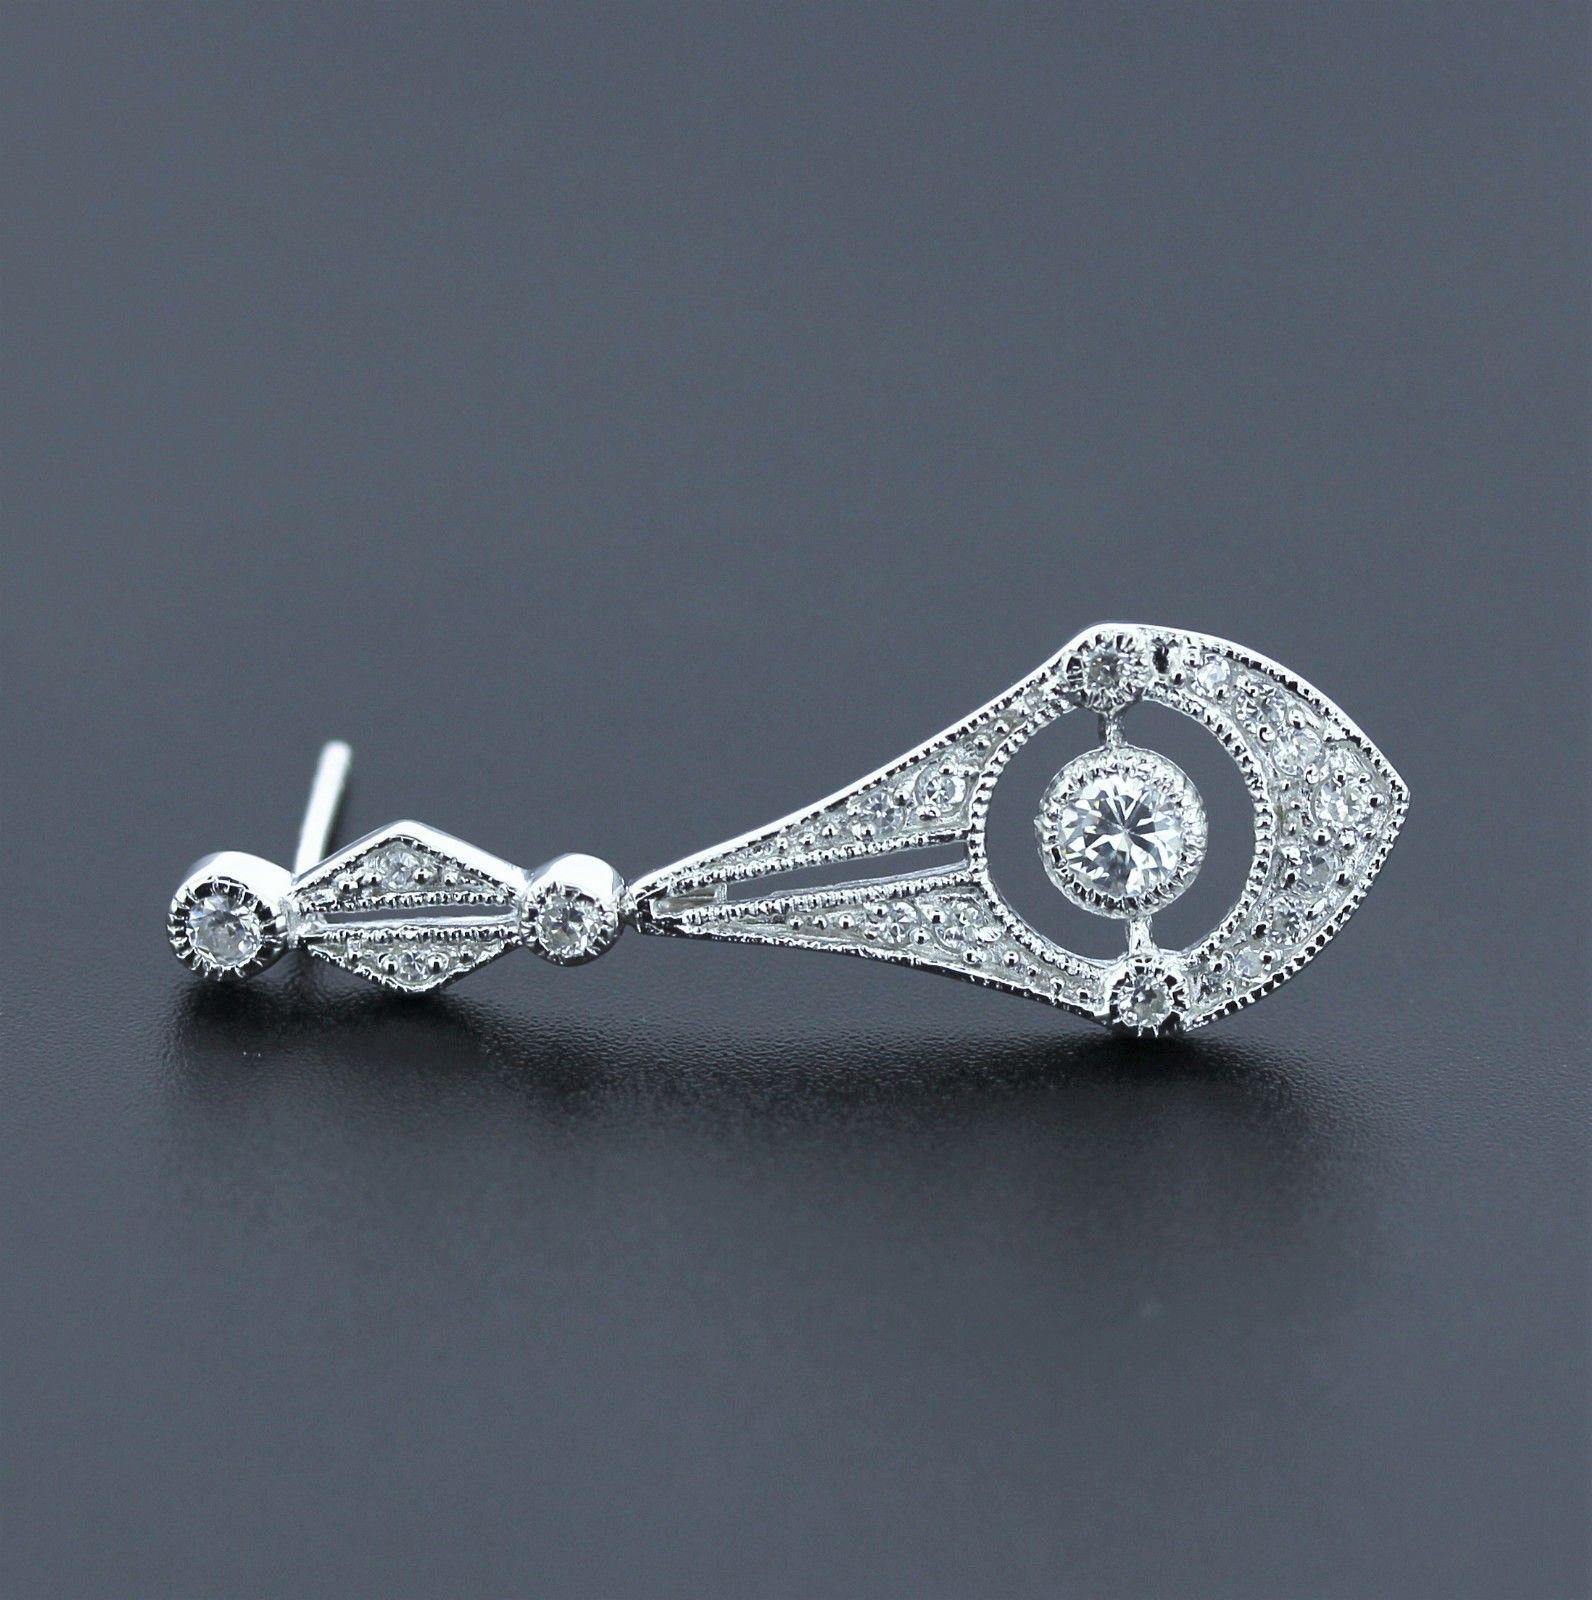 Sterling Silver Bridal Wedding Art Deco Vintage Inspired CZ Drop Earrings - STERLING SILVER DESIGNS